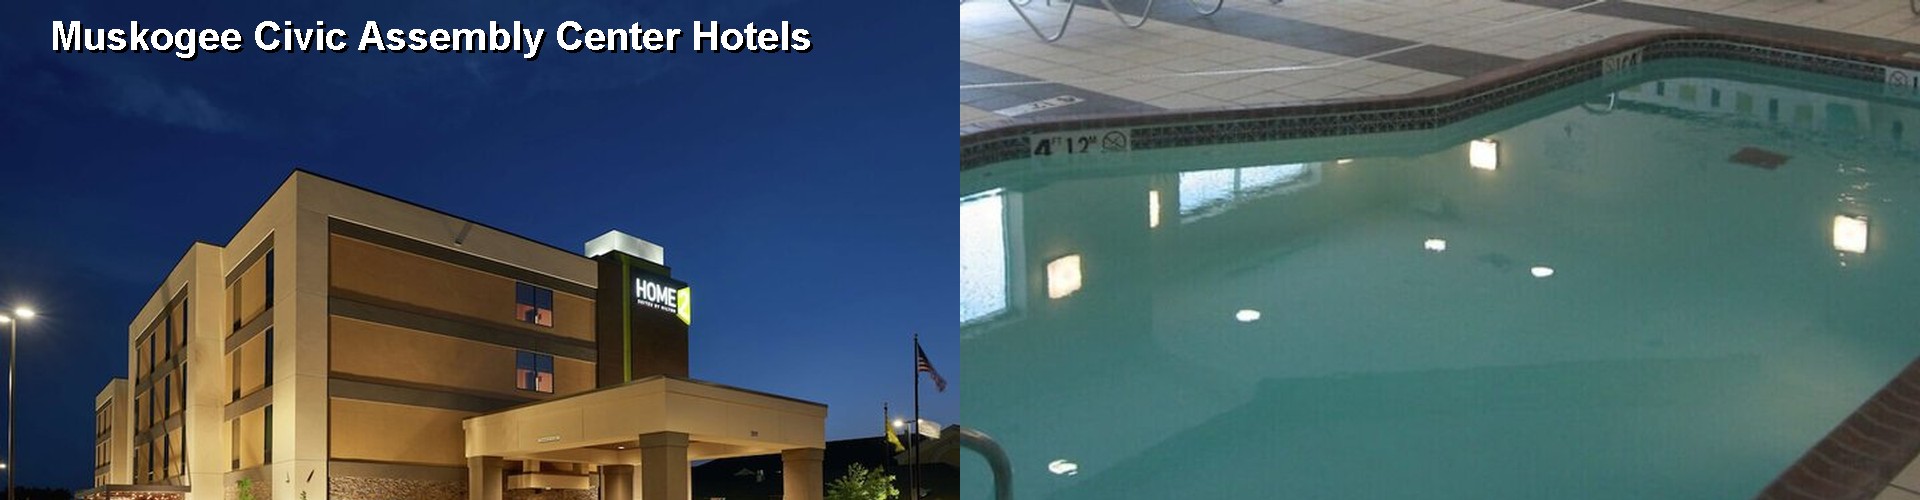 5 Best Hotels near Muskogee Civic Assembly Center